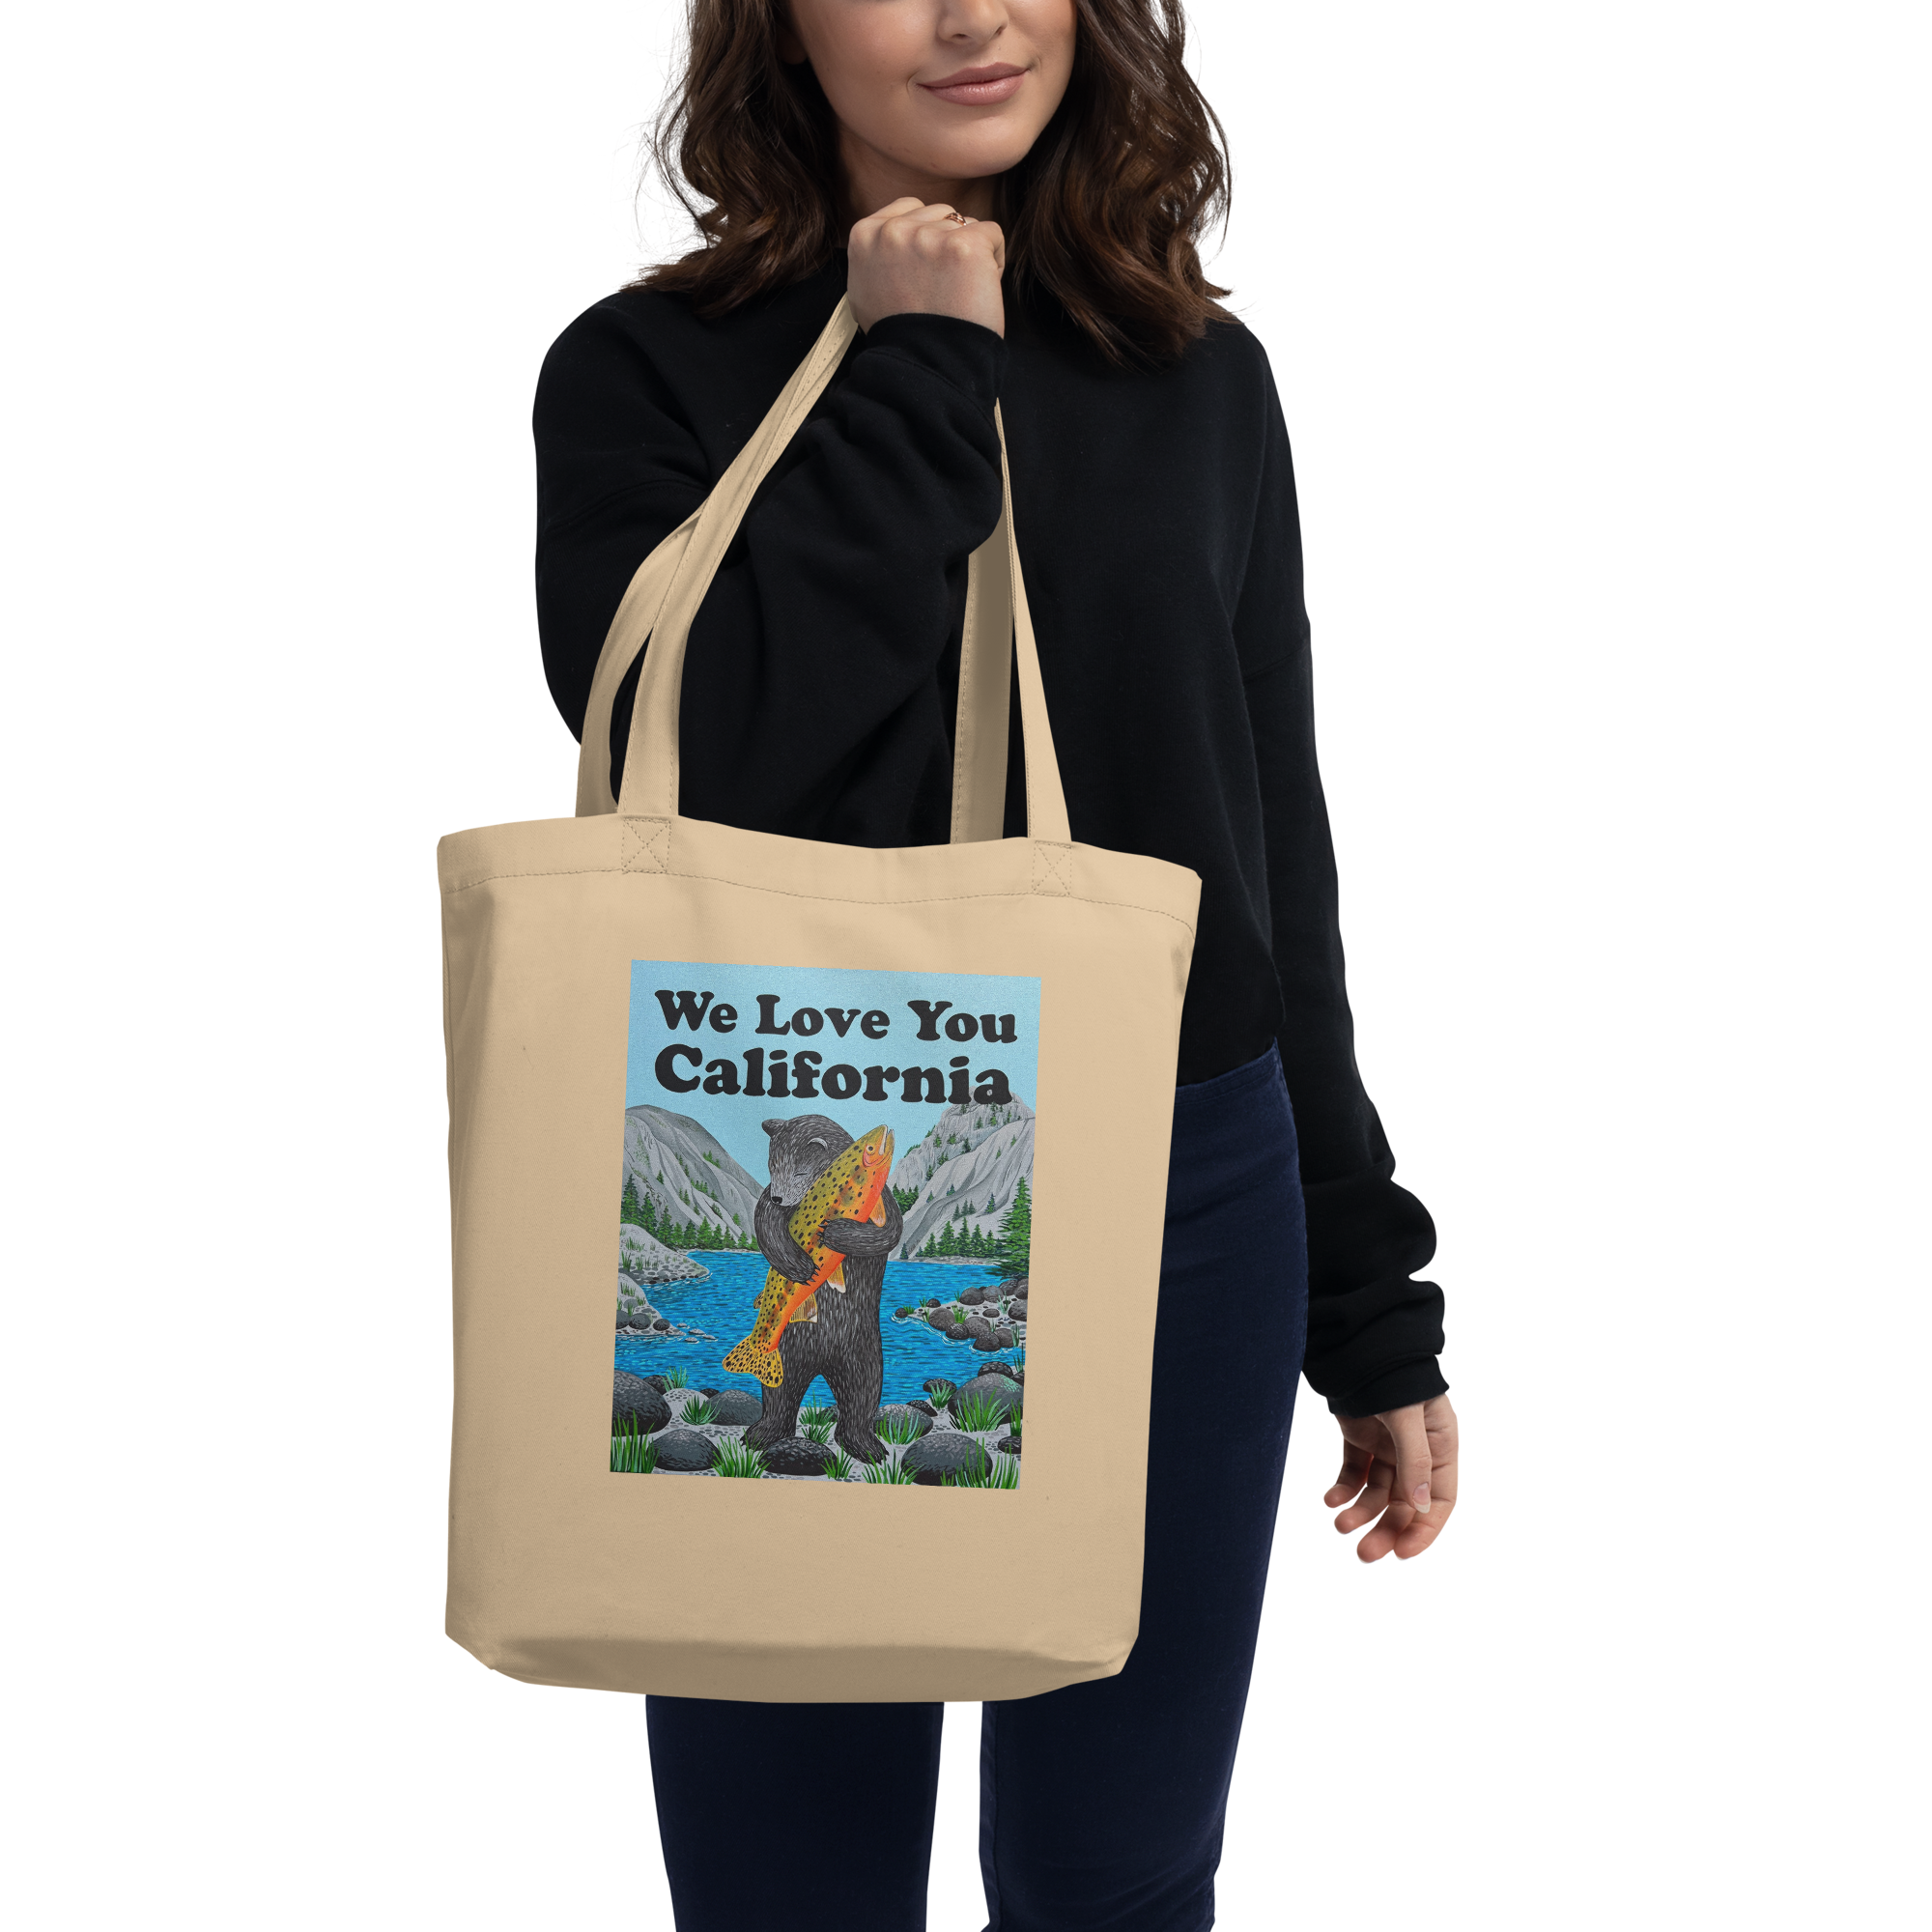 We Love You California” Eco Tote Bag